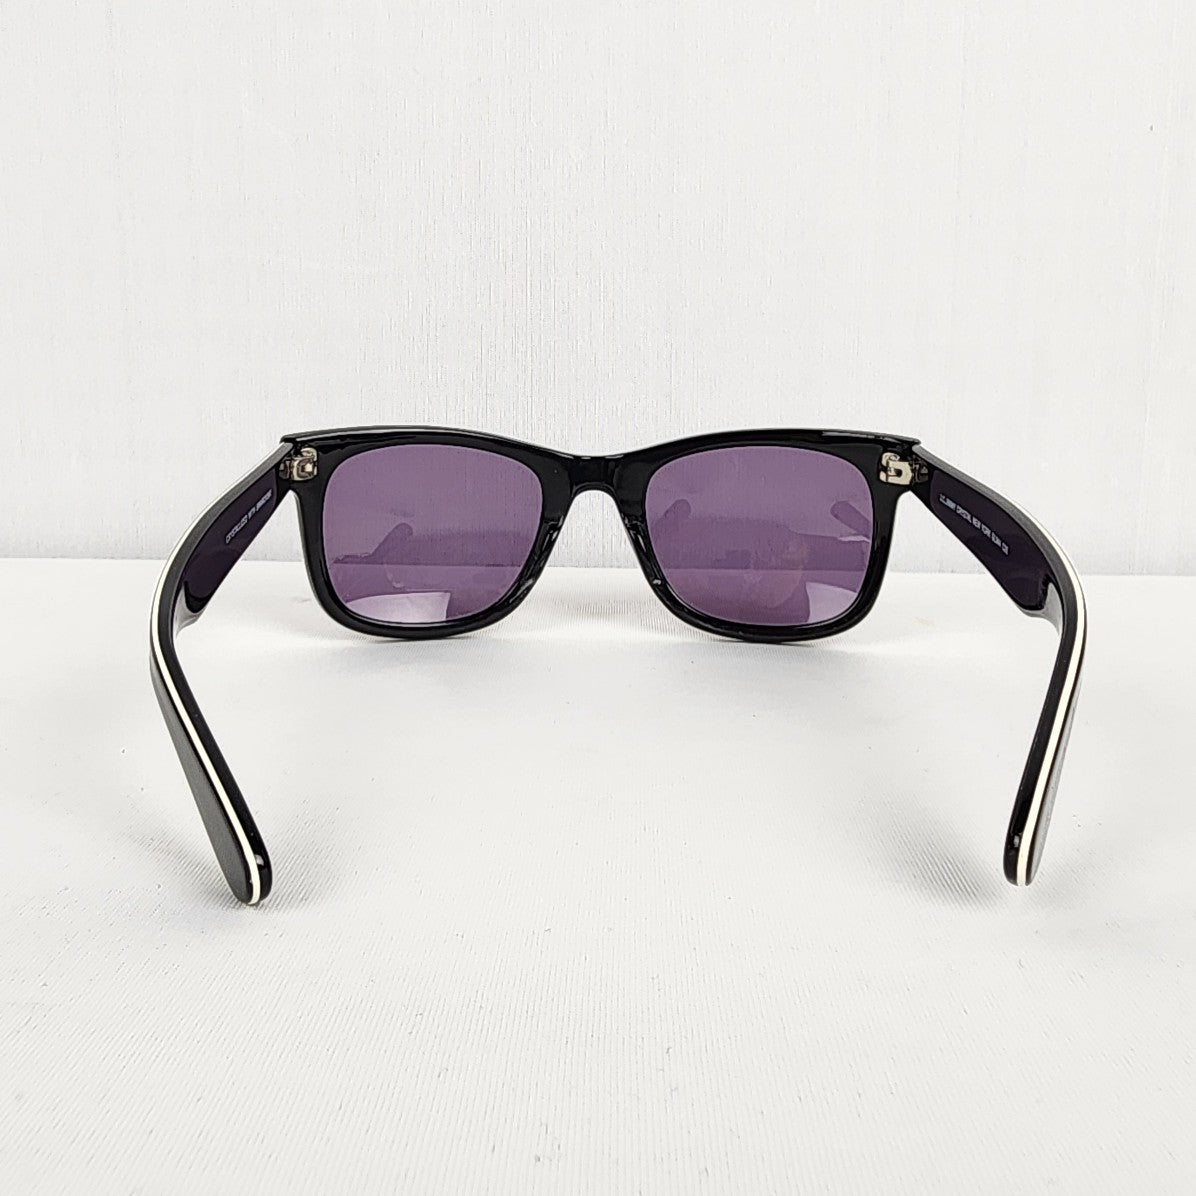 Jimmy Crystal Black Swarovski Crystal Sunglasses